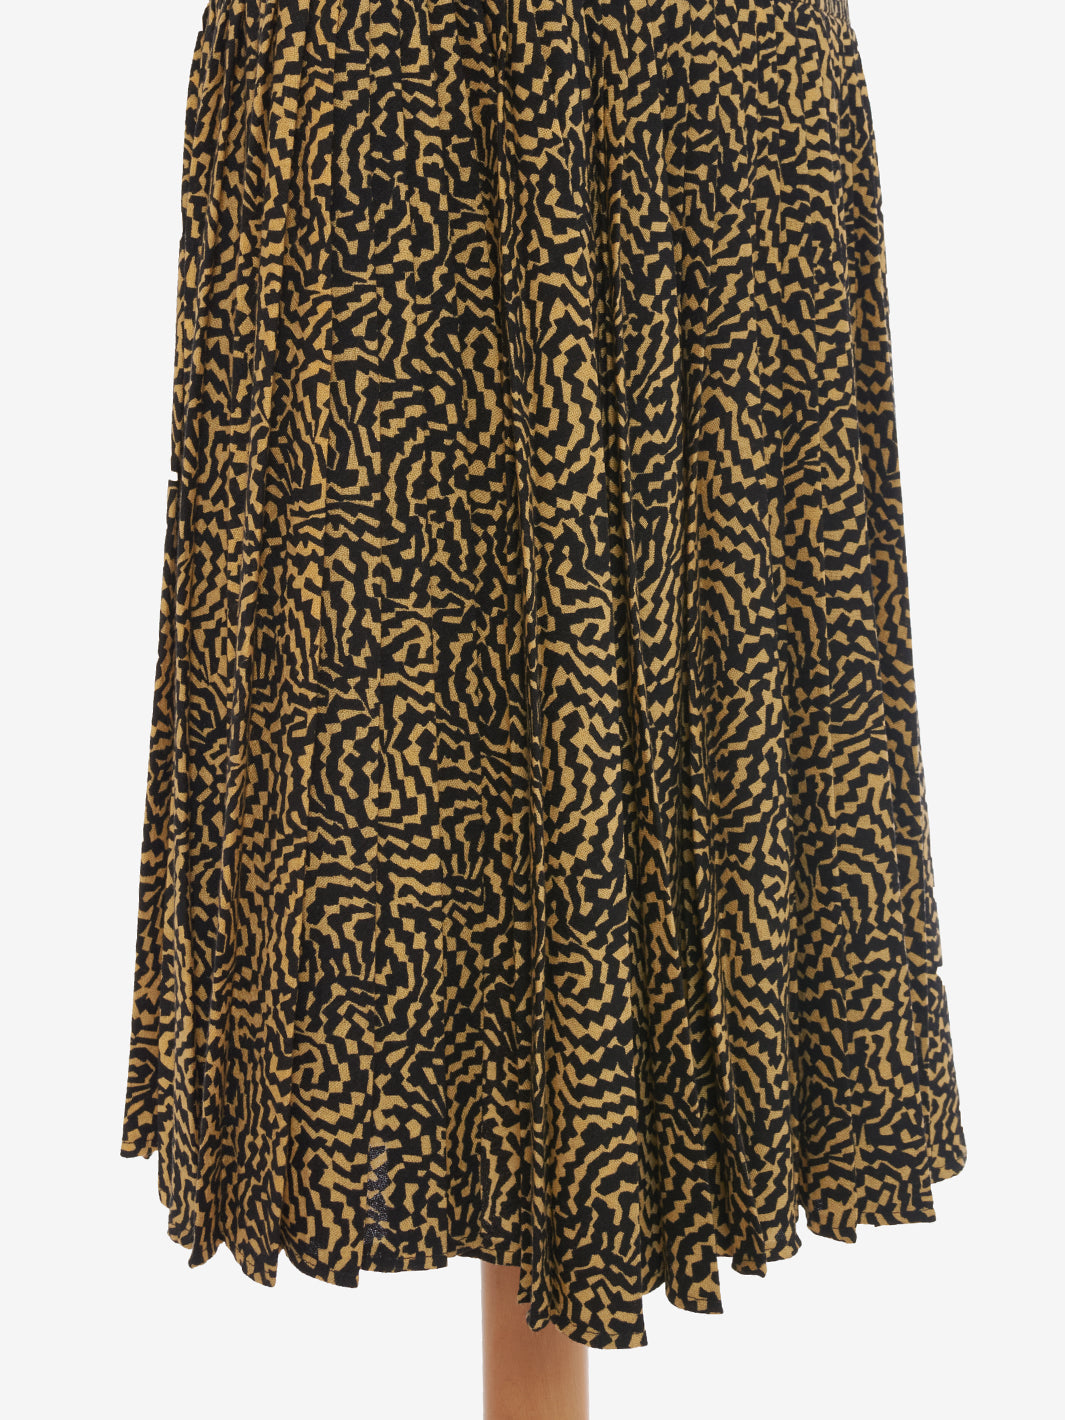 Gianni Versace Patterned Wool Skirt